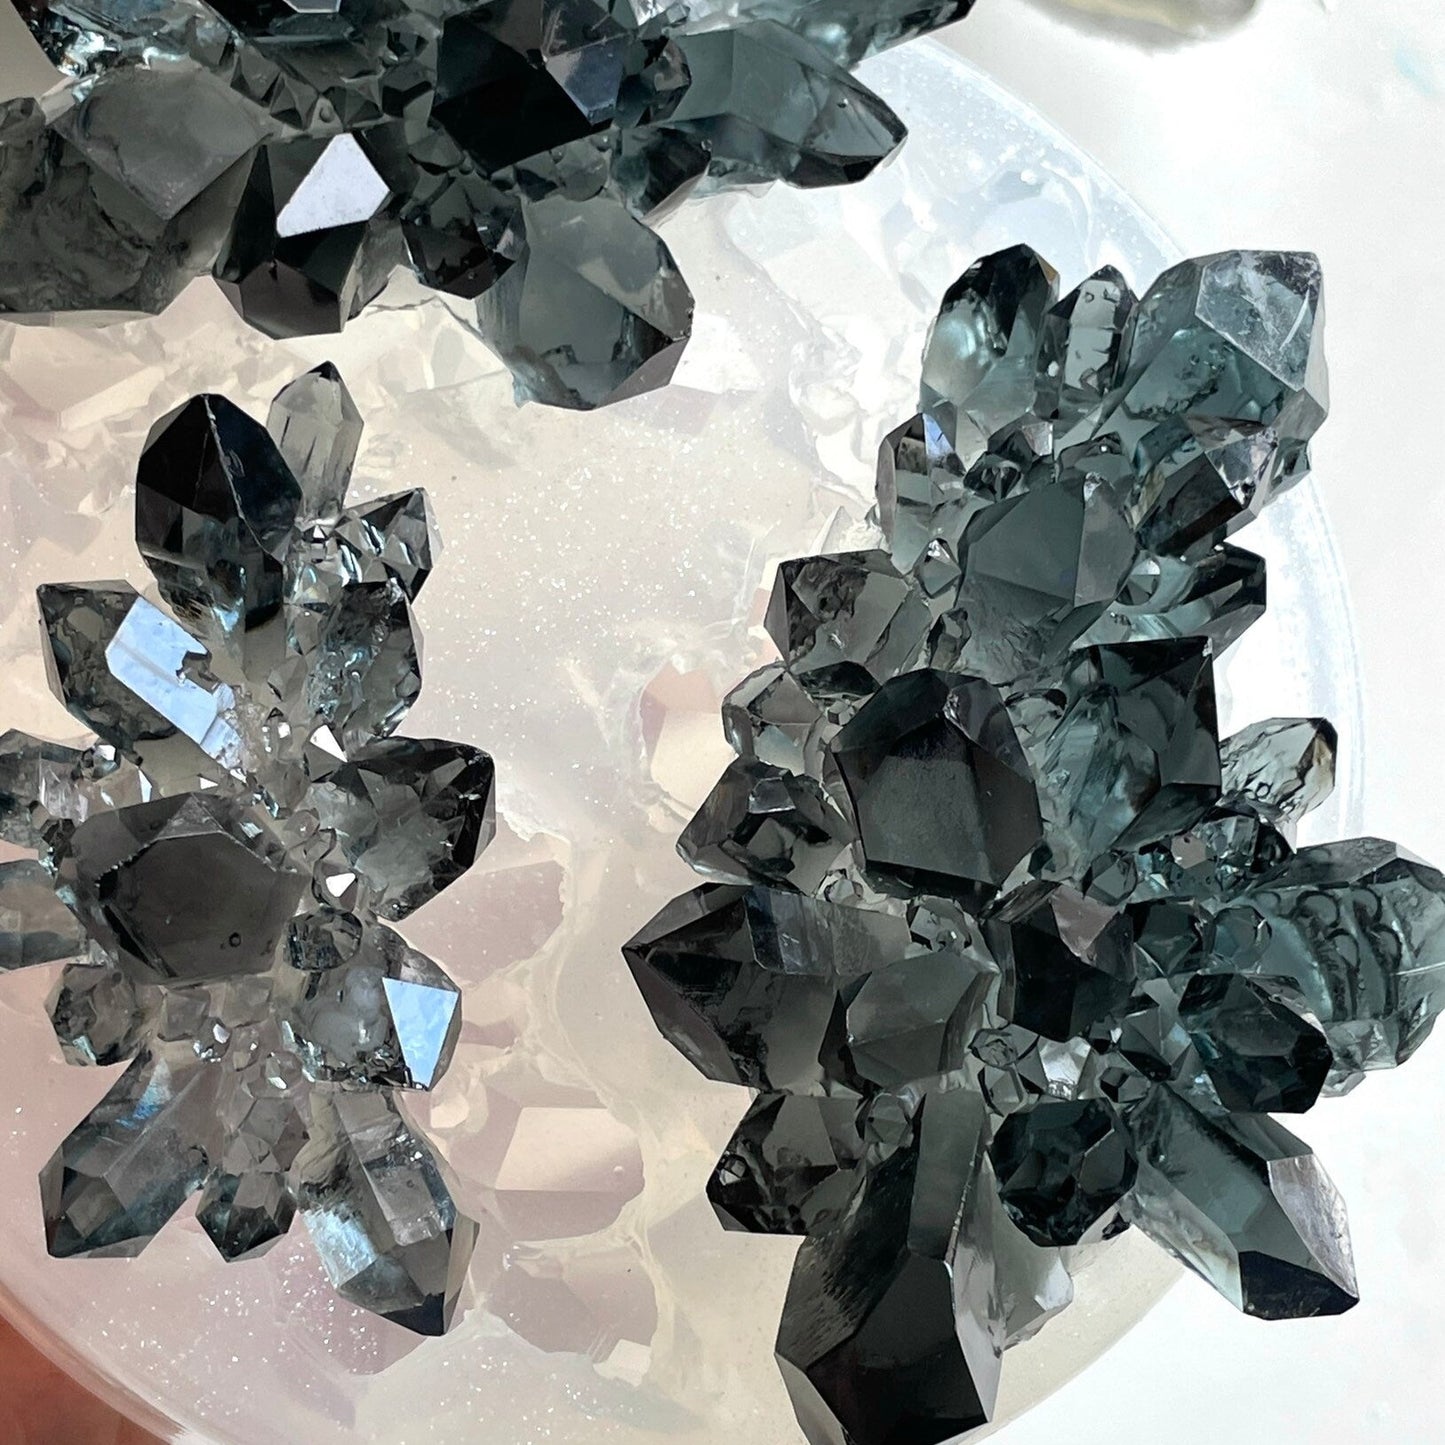 Kristallcluster 3-teilige Form: Kunstharz und Acryl